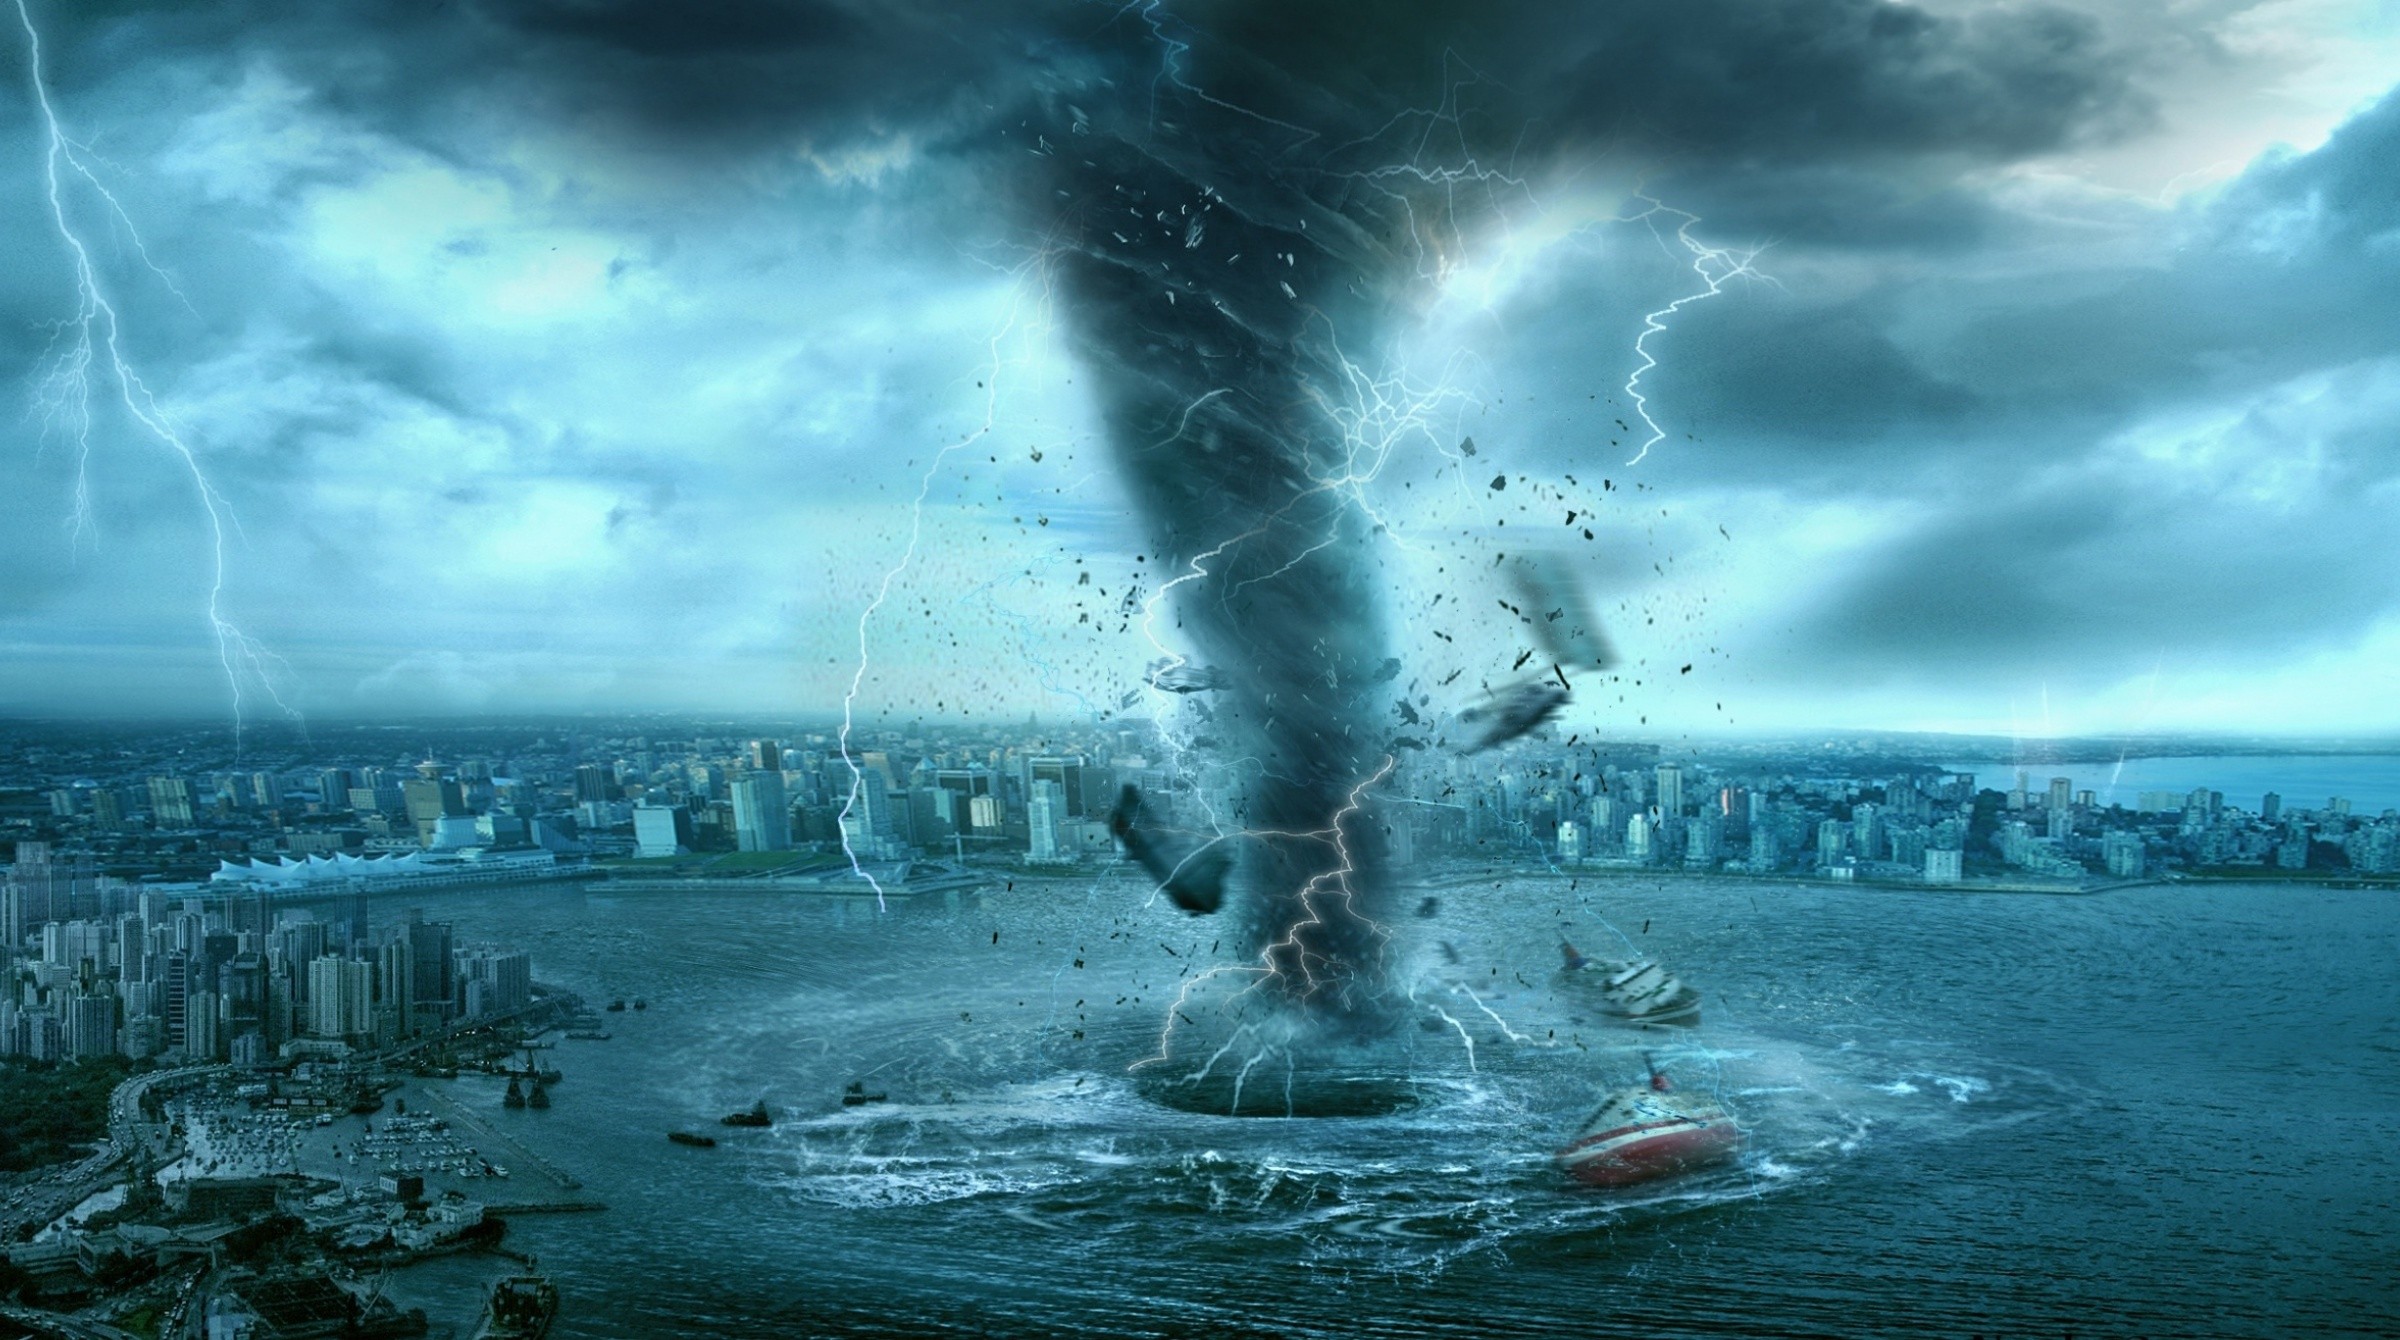 Tornado Digital Art Cityscape Sea Boat Apocalyptic Storm 2400x1340